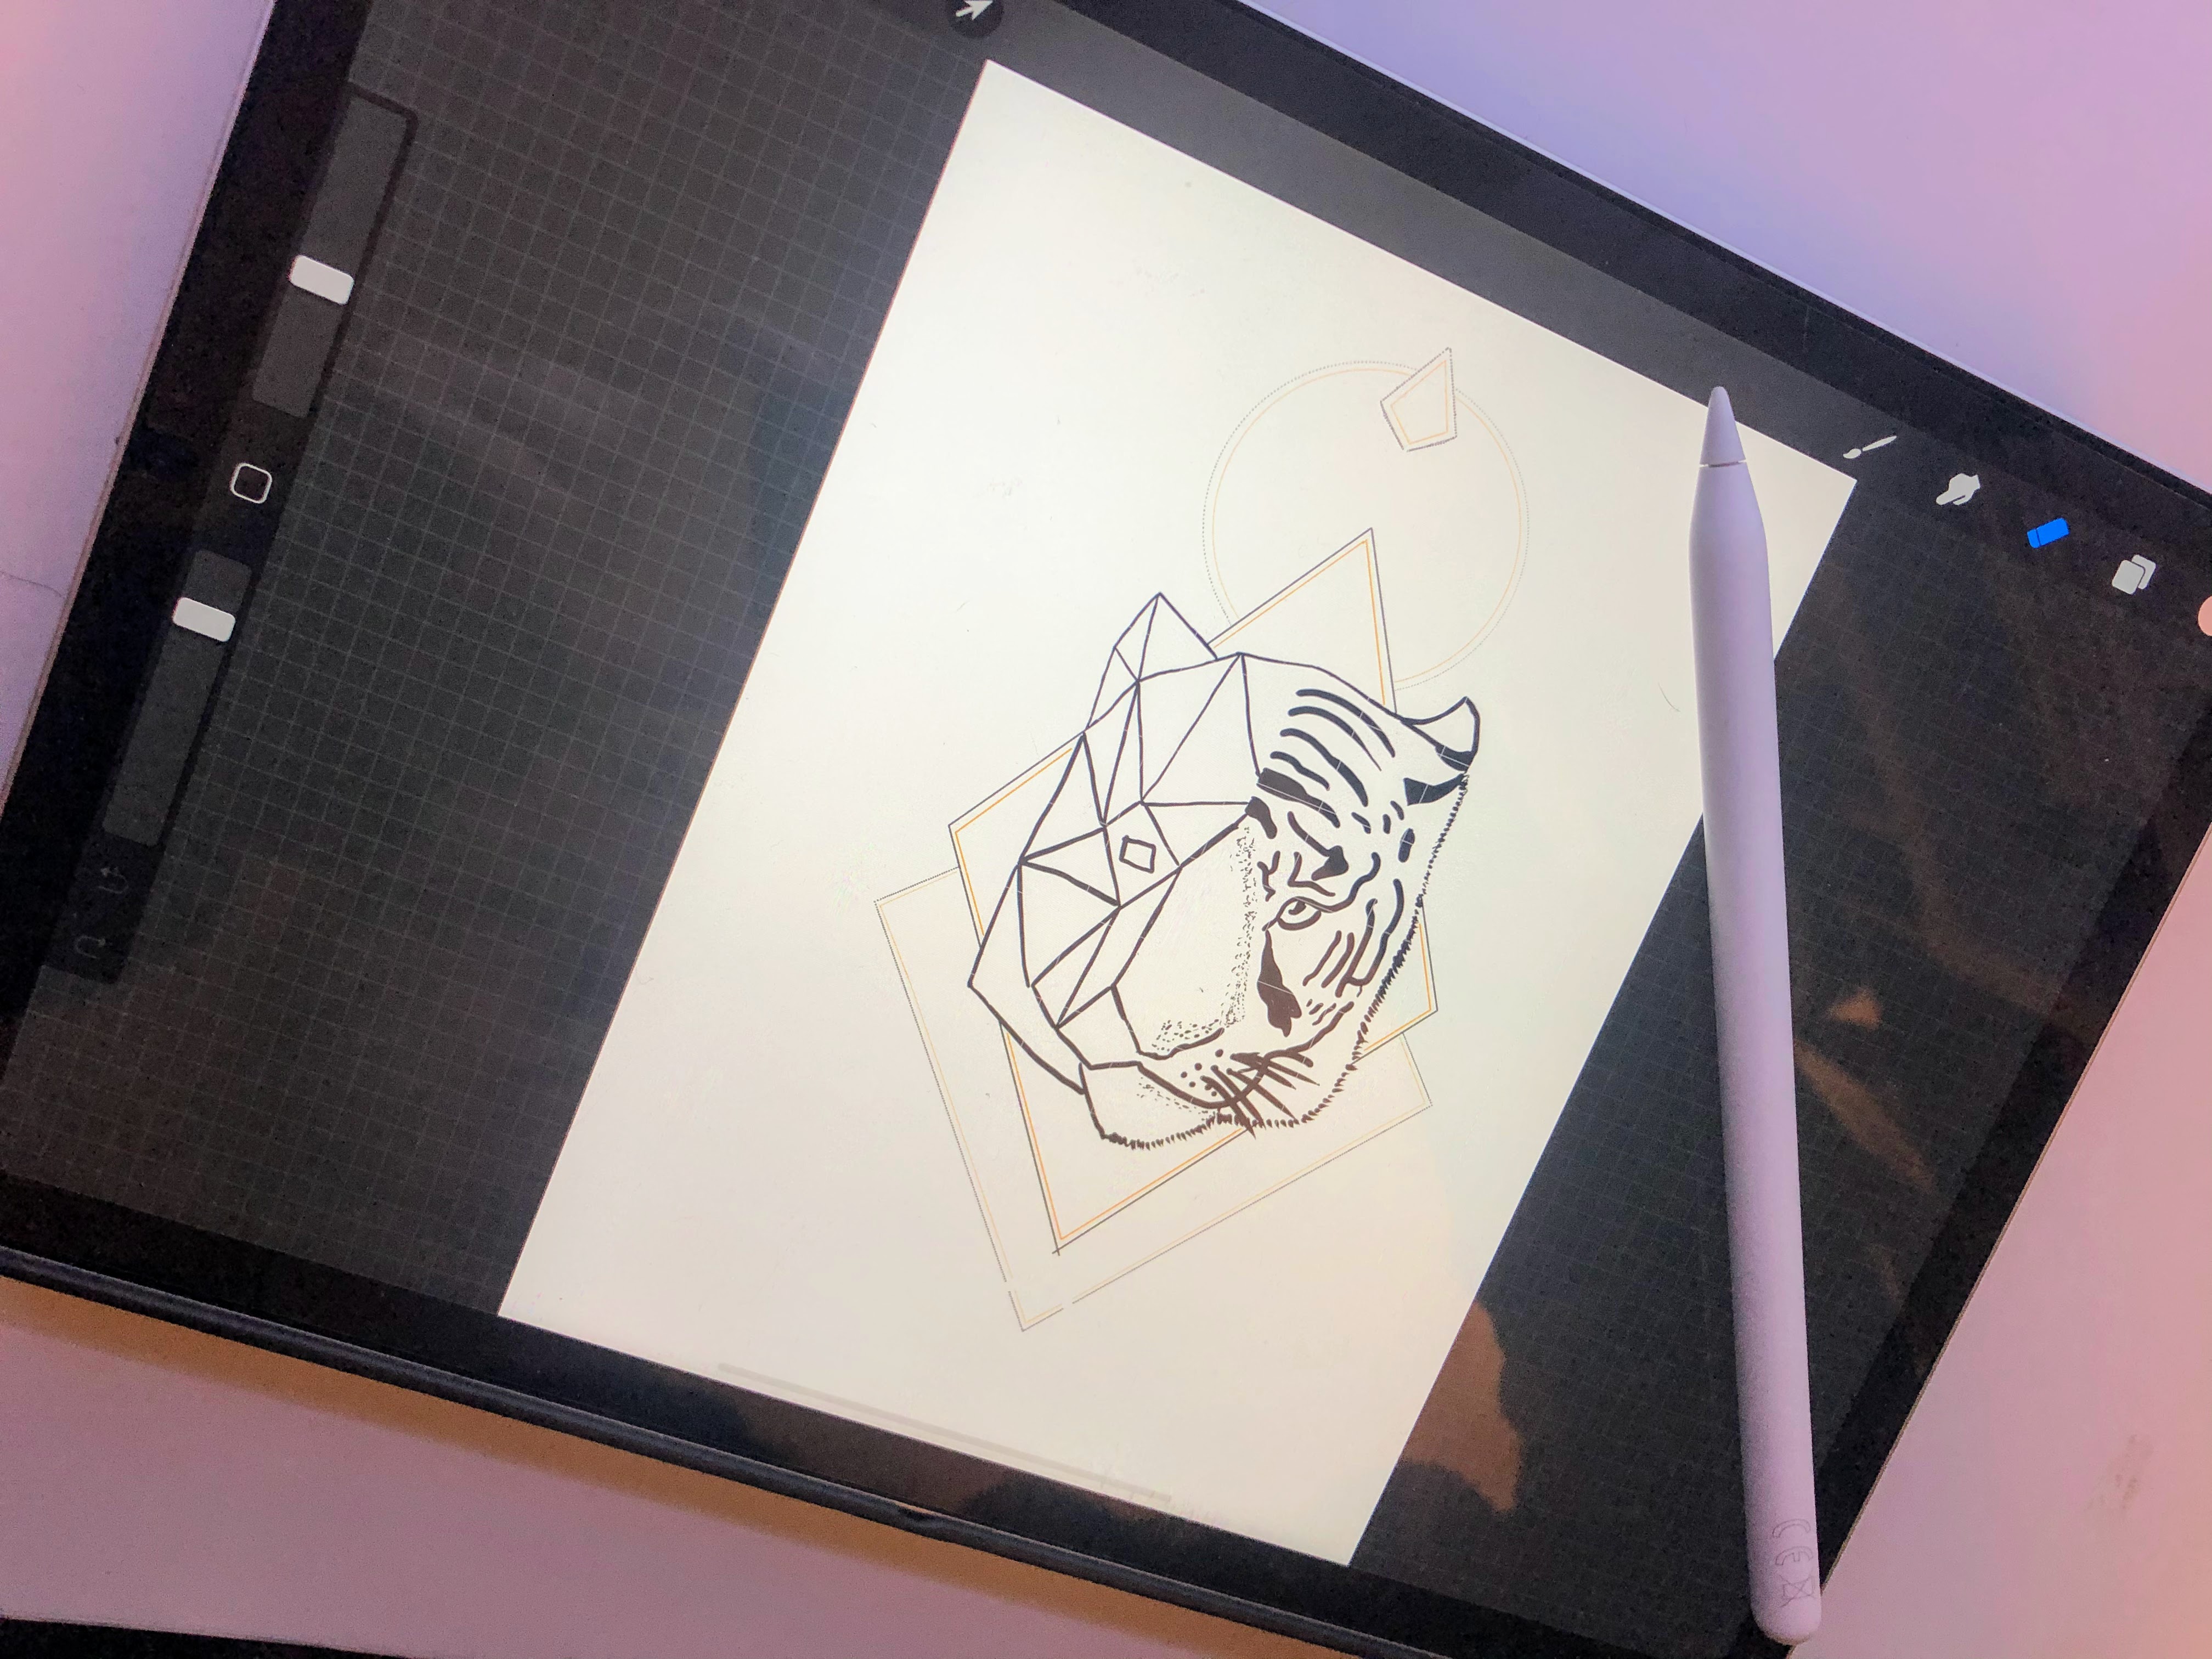 Tiger drawing on iPad